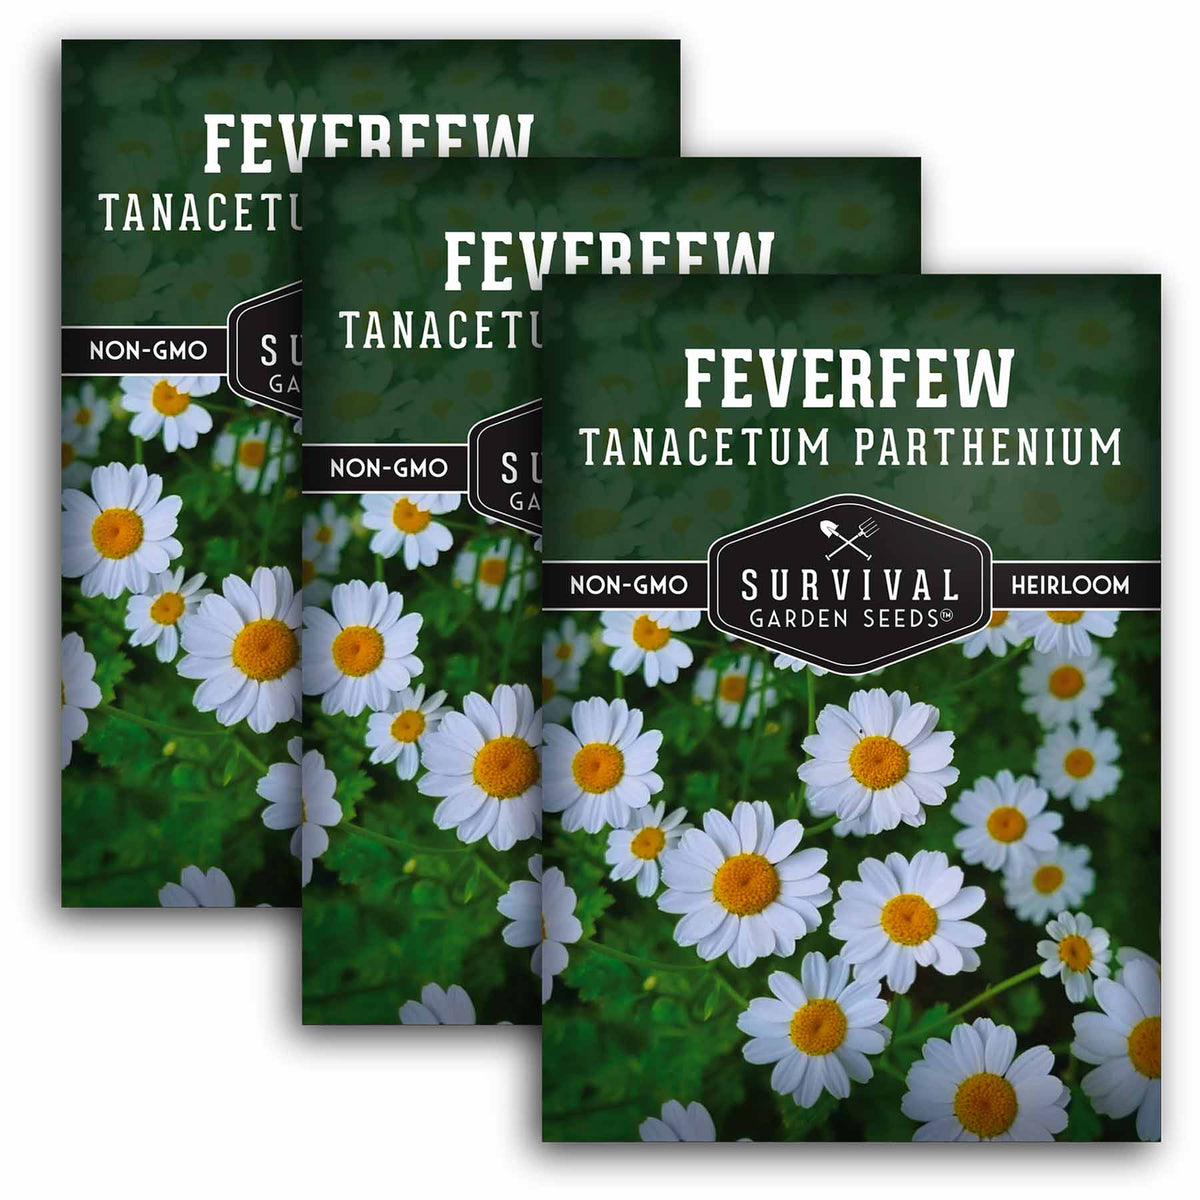 3 packets of Feverfew seeds